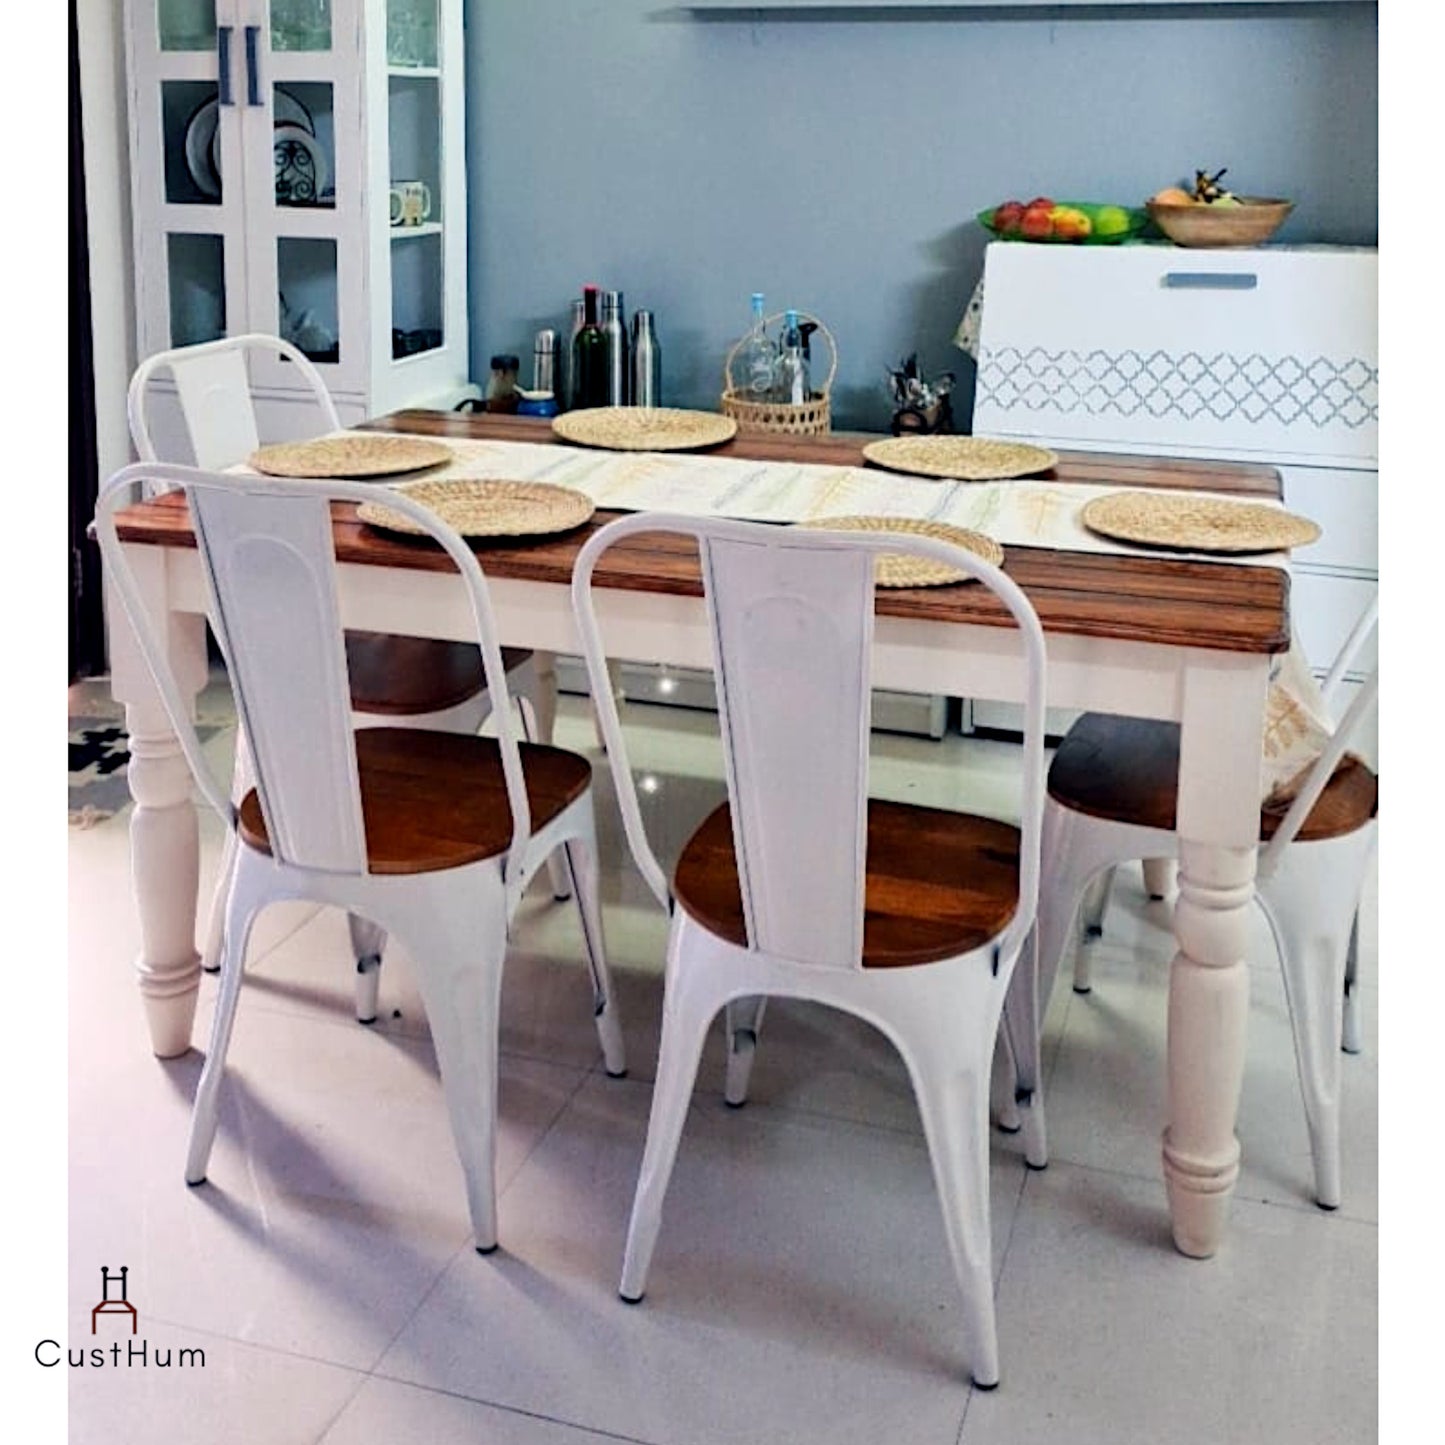 CustHum-Aberdeen-farmhouse style dining table metal chairs